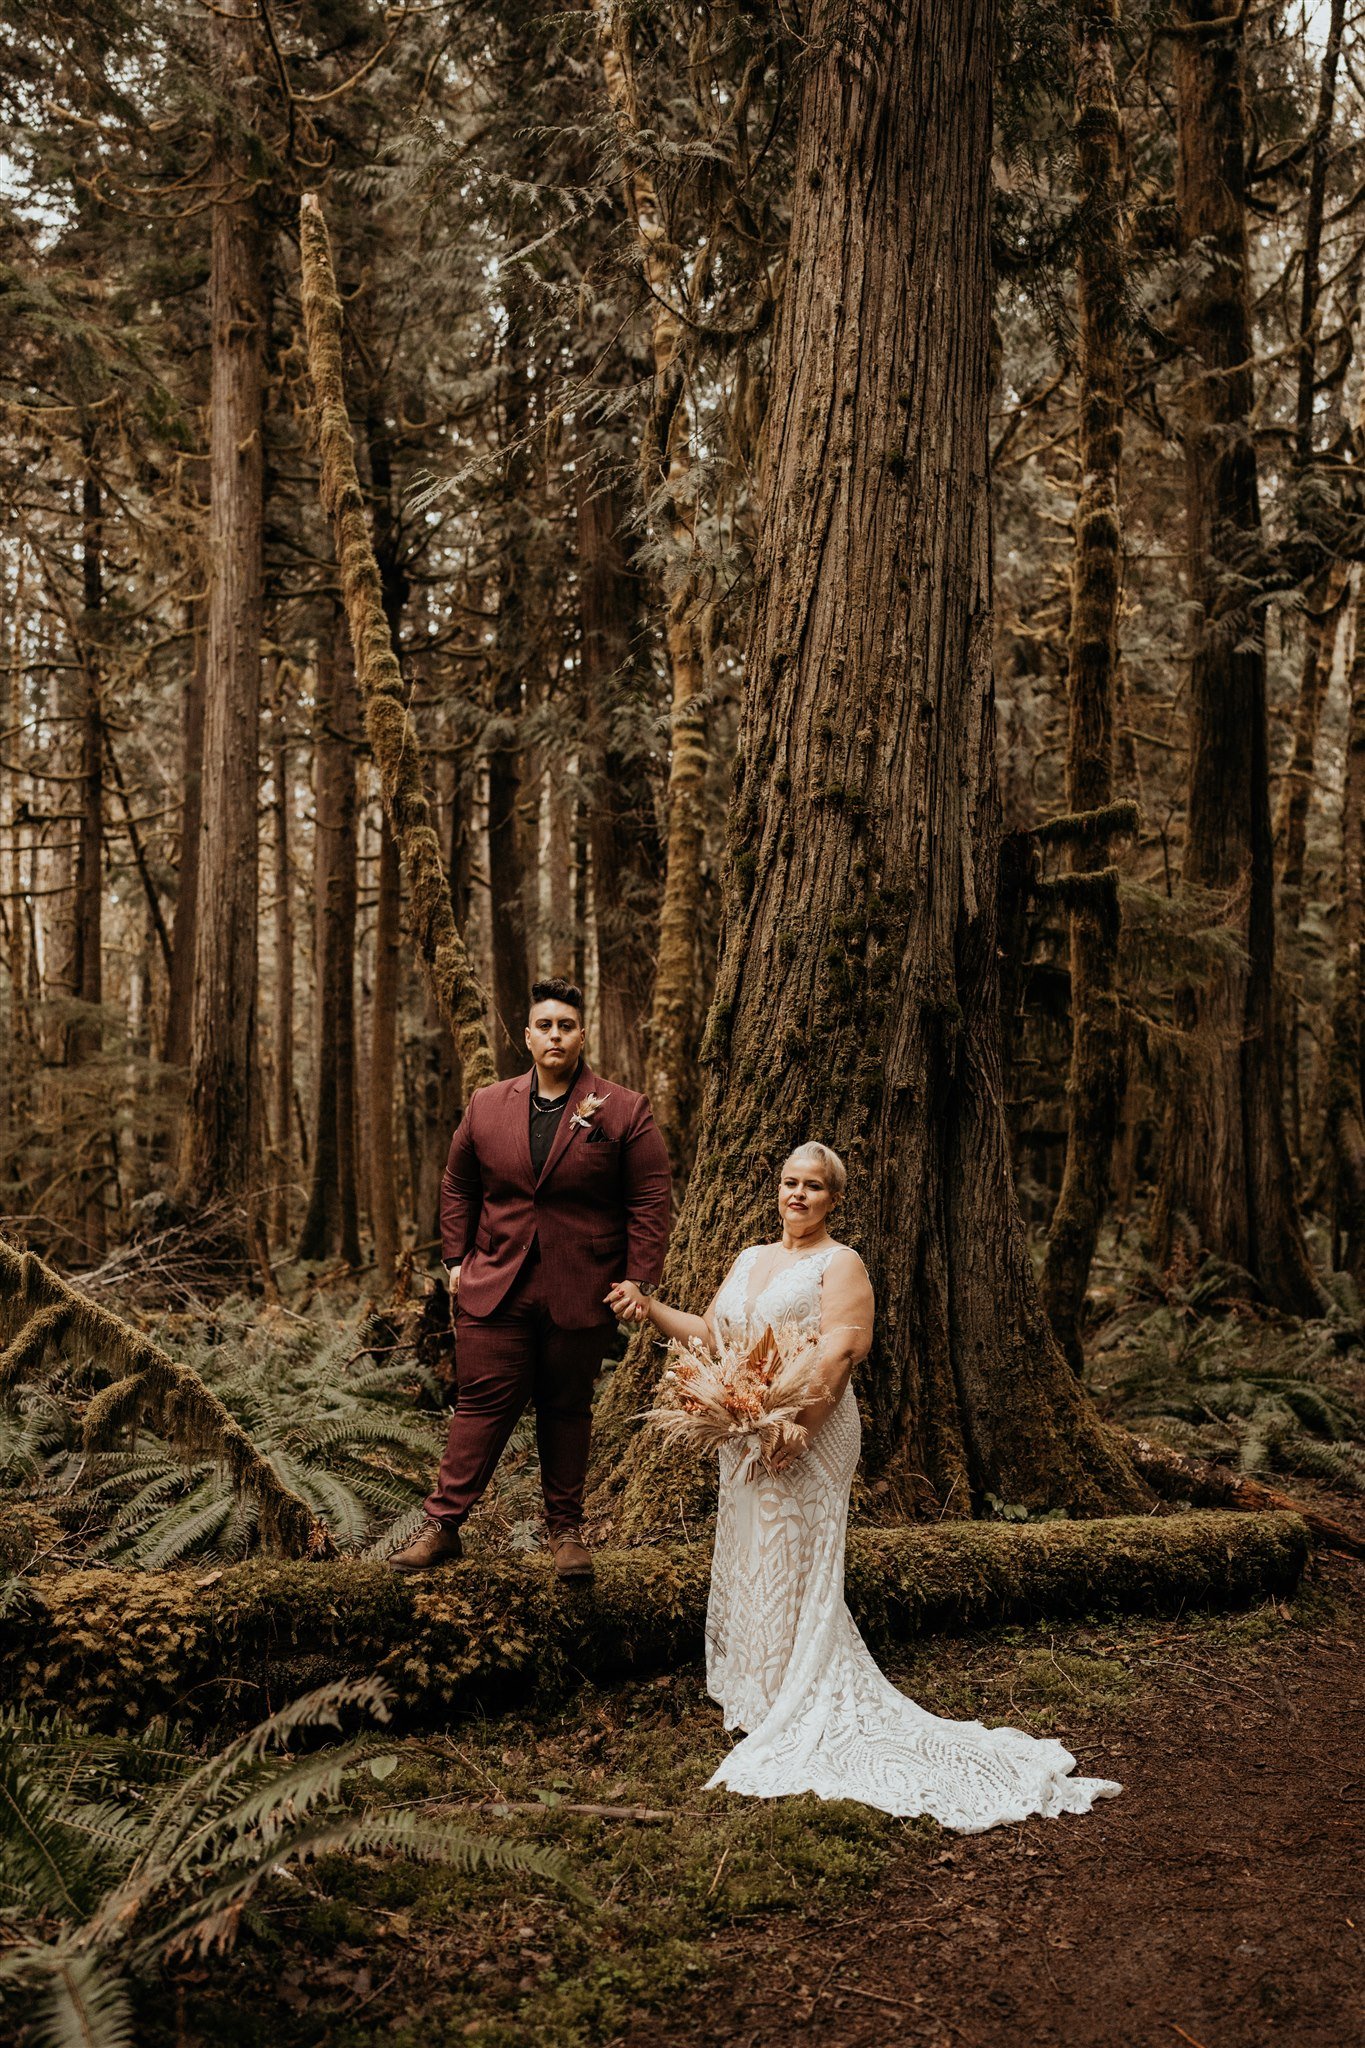 LTBTQ elopement portrait photos in the forest